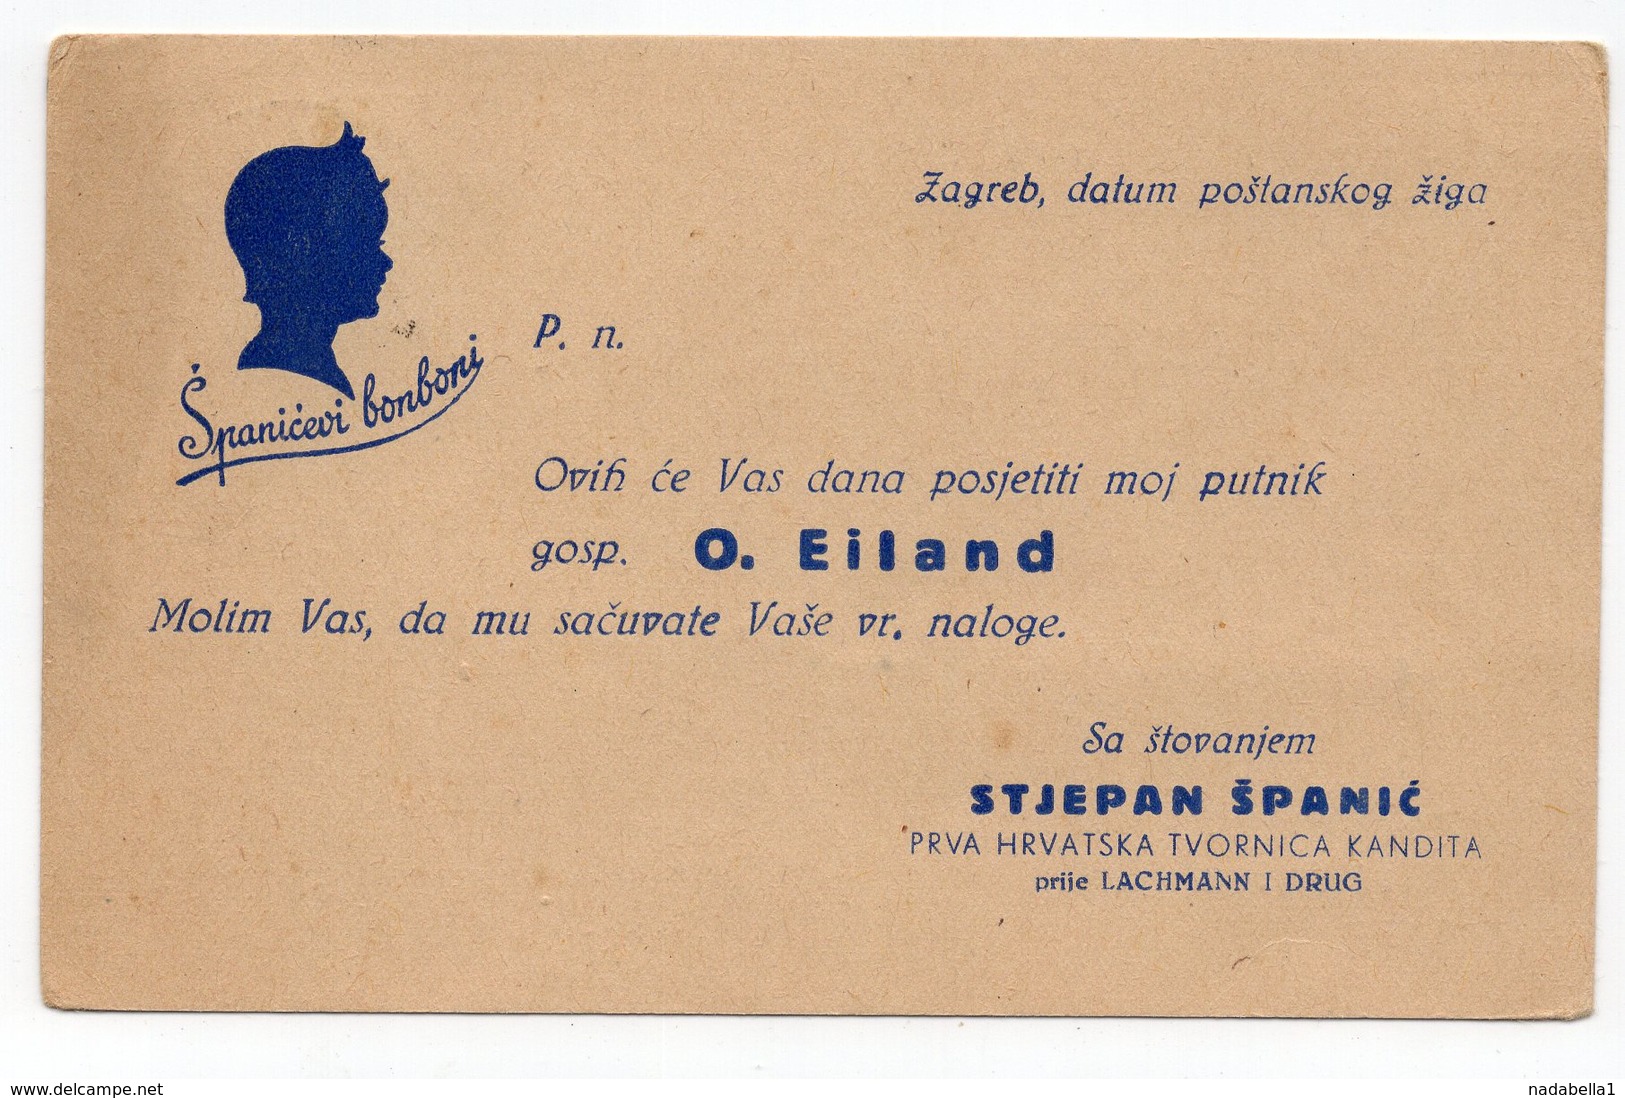 1938 YUGOSLAVIA, CROATIA, ZAGREB TO STARI VRBAS, SPANICEVI BOMBONI, SWEETS MANUFACTURING, CORRESPONDENCE CARD - Covers & Documents